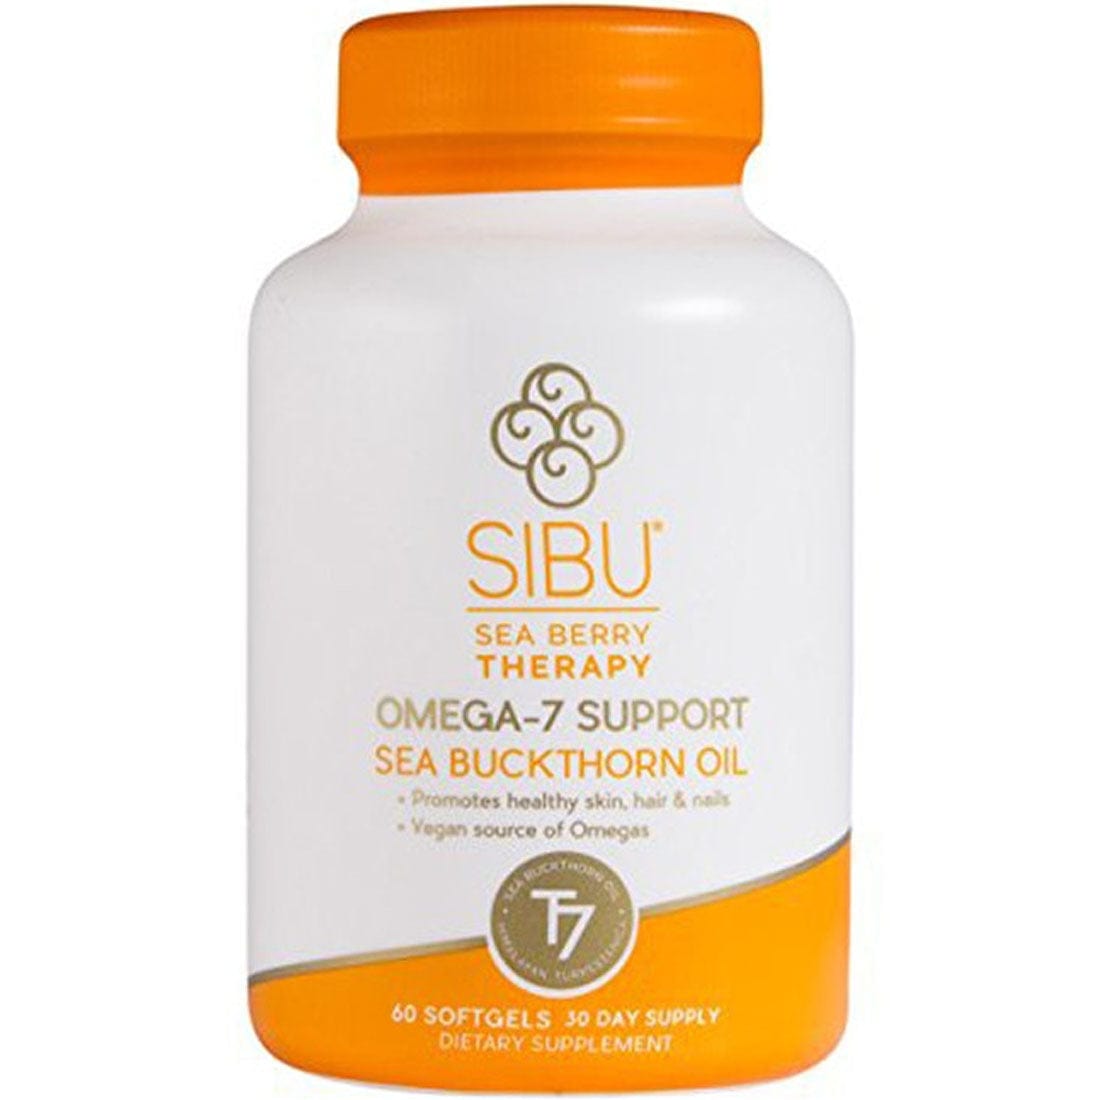 SIBU Omega-7 Sea Buckthorn Oil